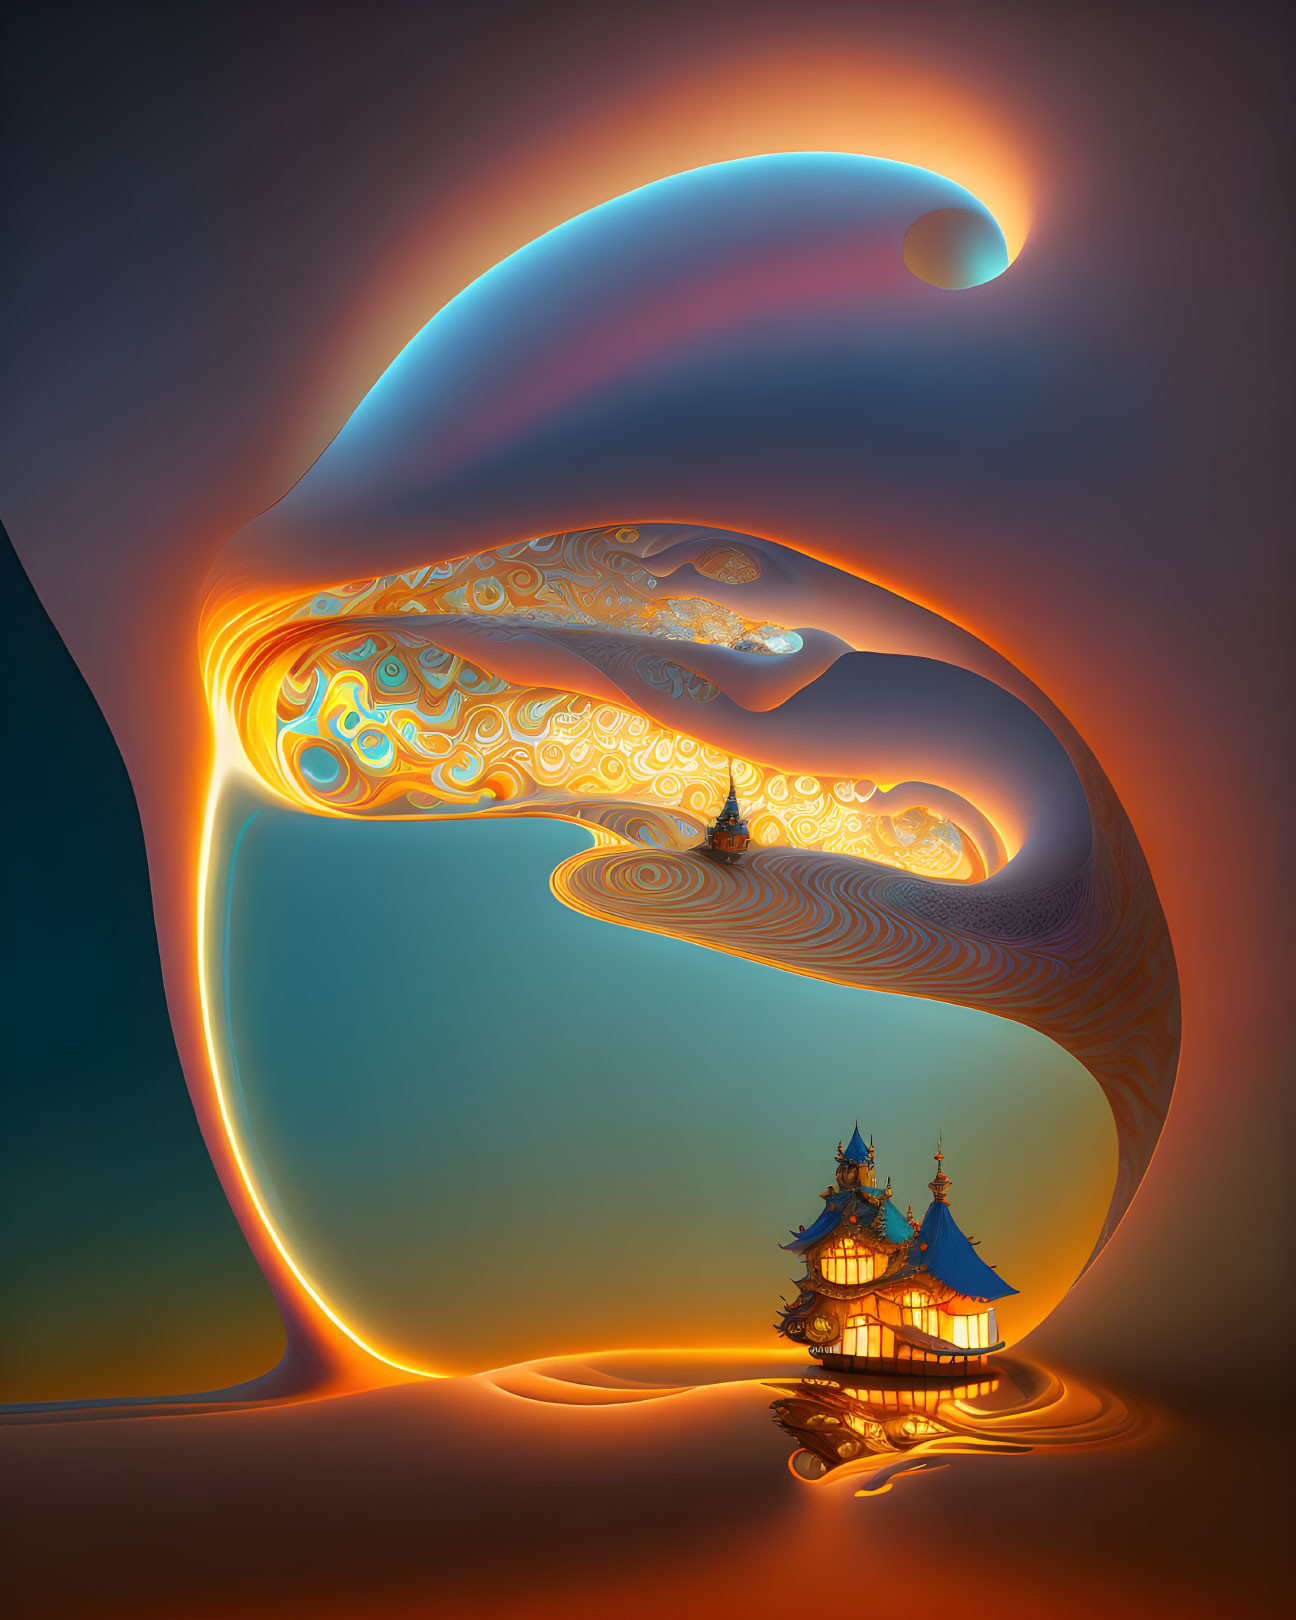 Colorful digital artwork: Swirling fiery ribbon around illuminated pagoda